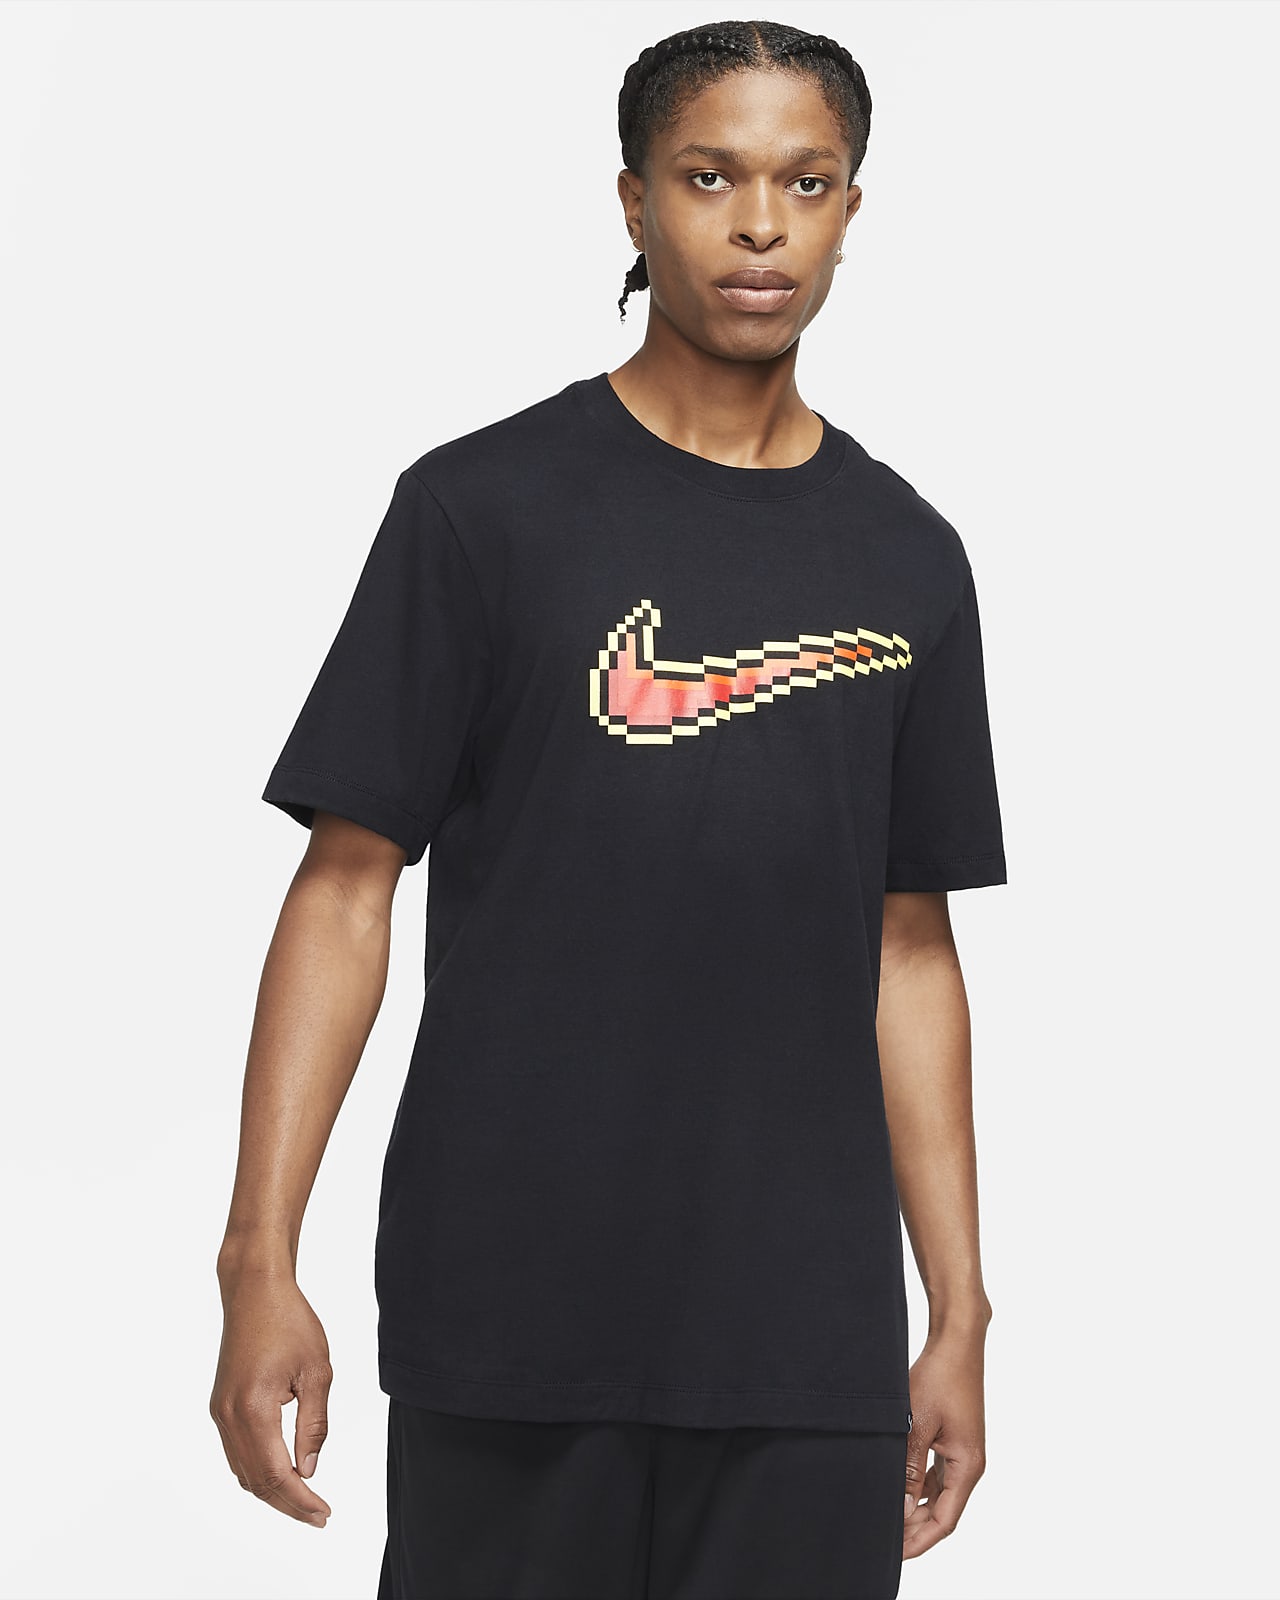 Nike Swoosh Men's Short-Sleeve Basketball T-Shirt